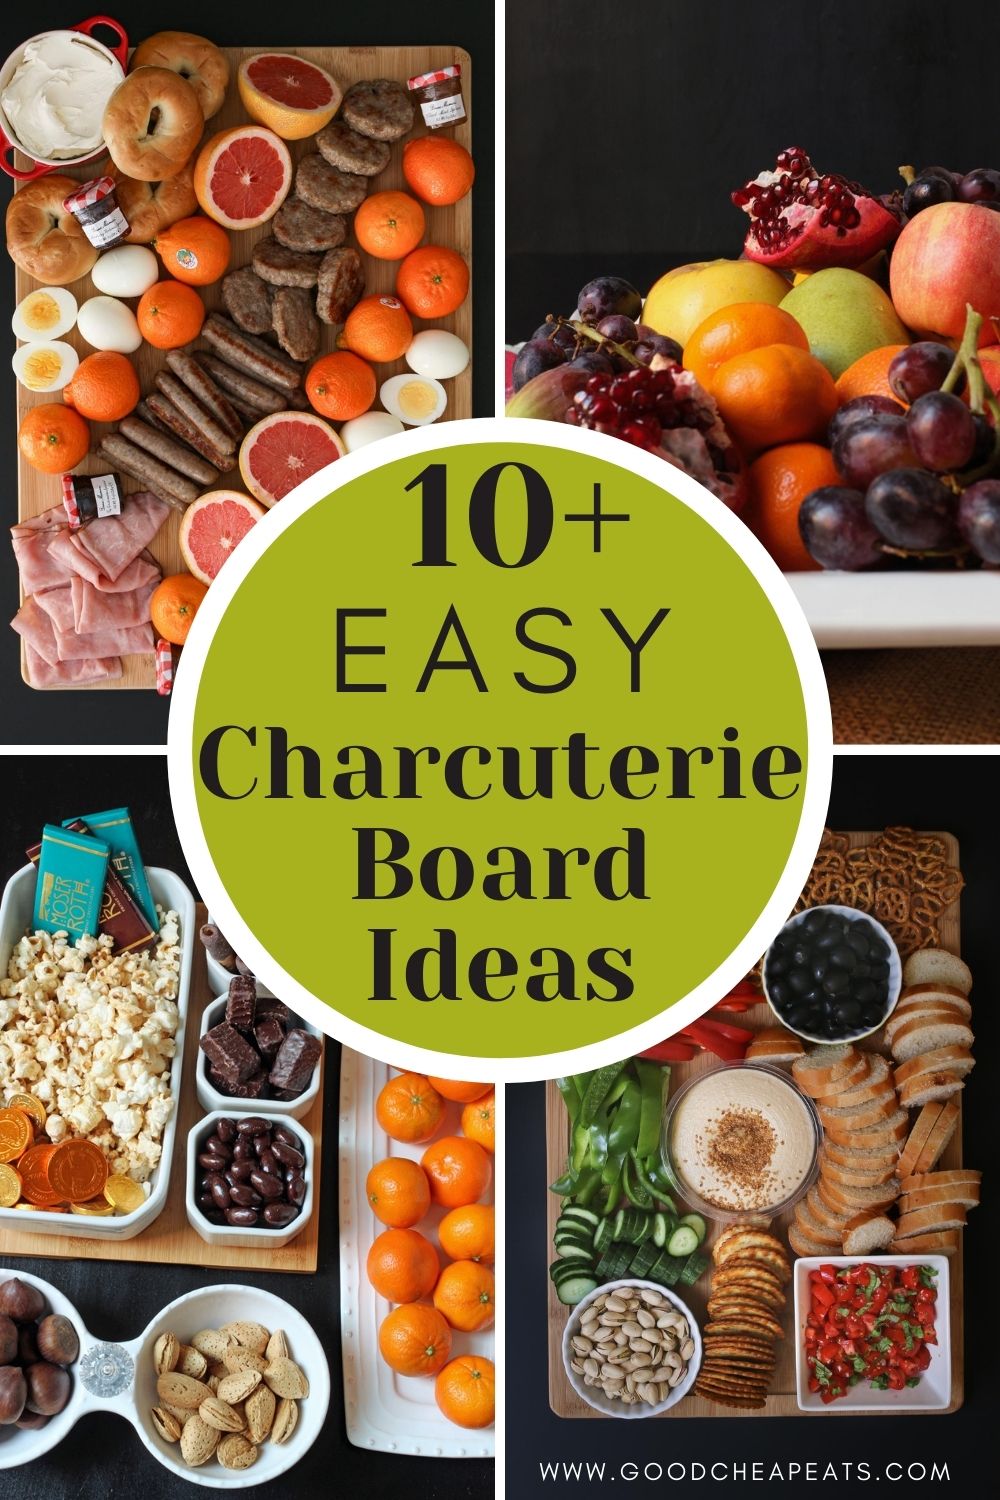 10+ Snack & Charcuterie Board Ideas - Good Cheap Eats